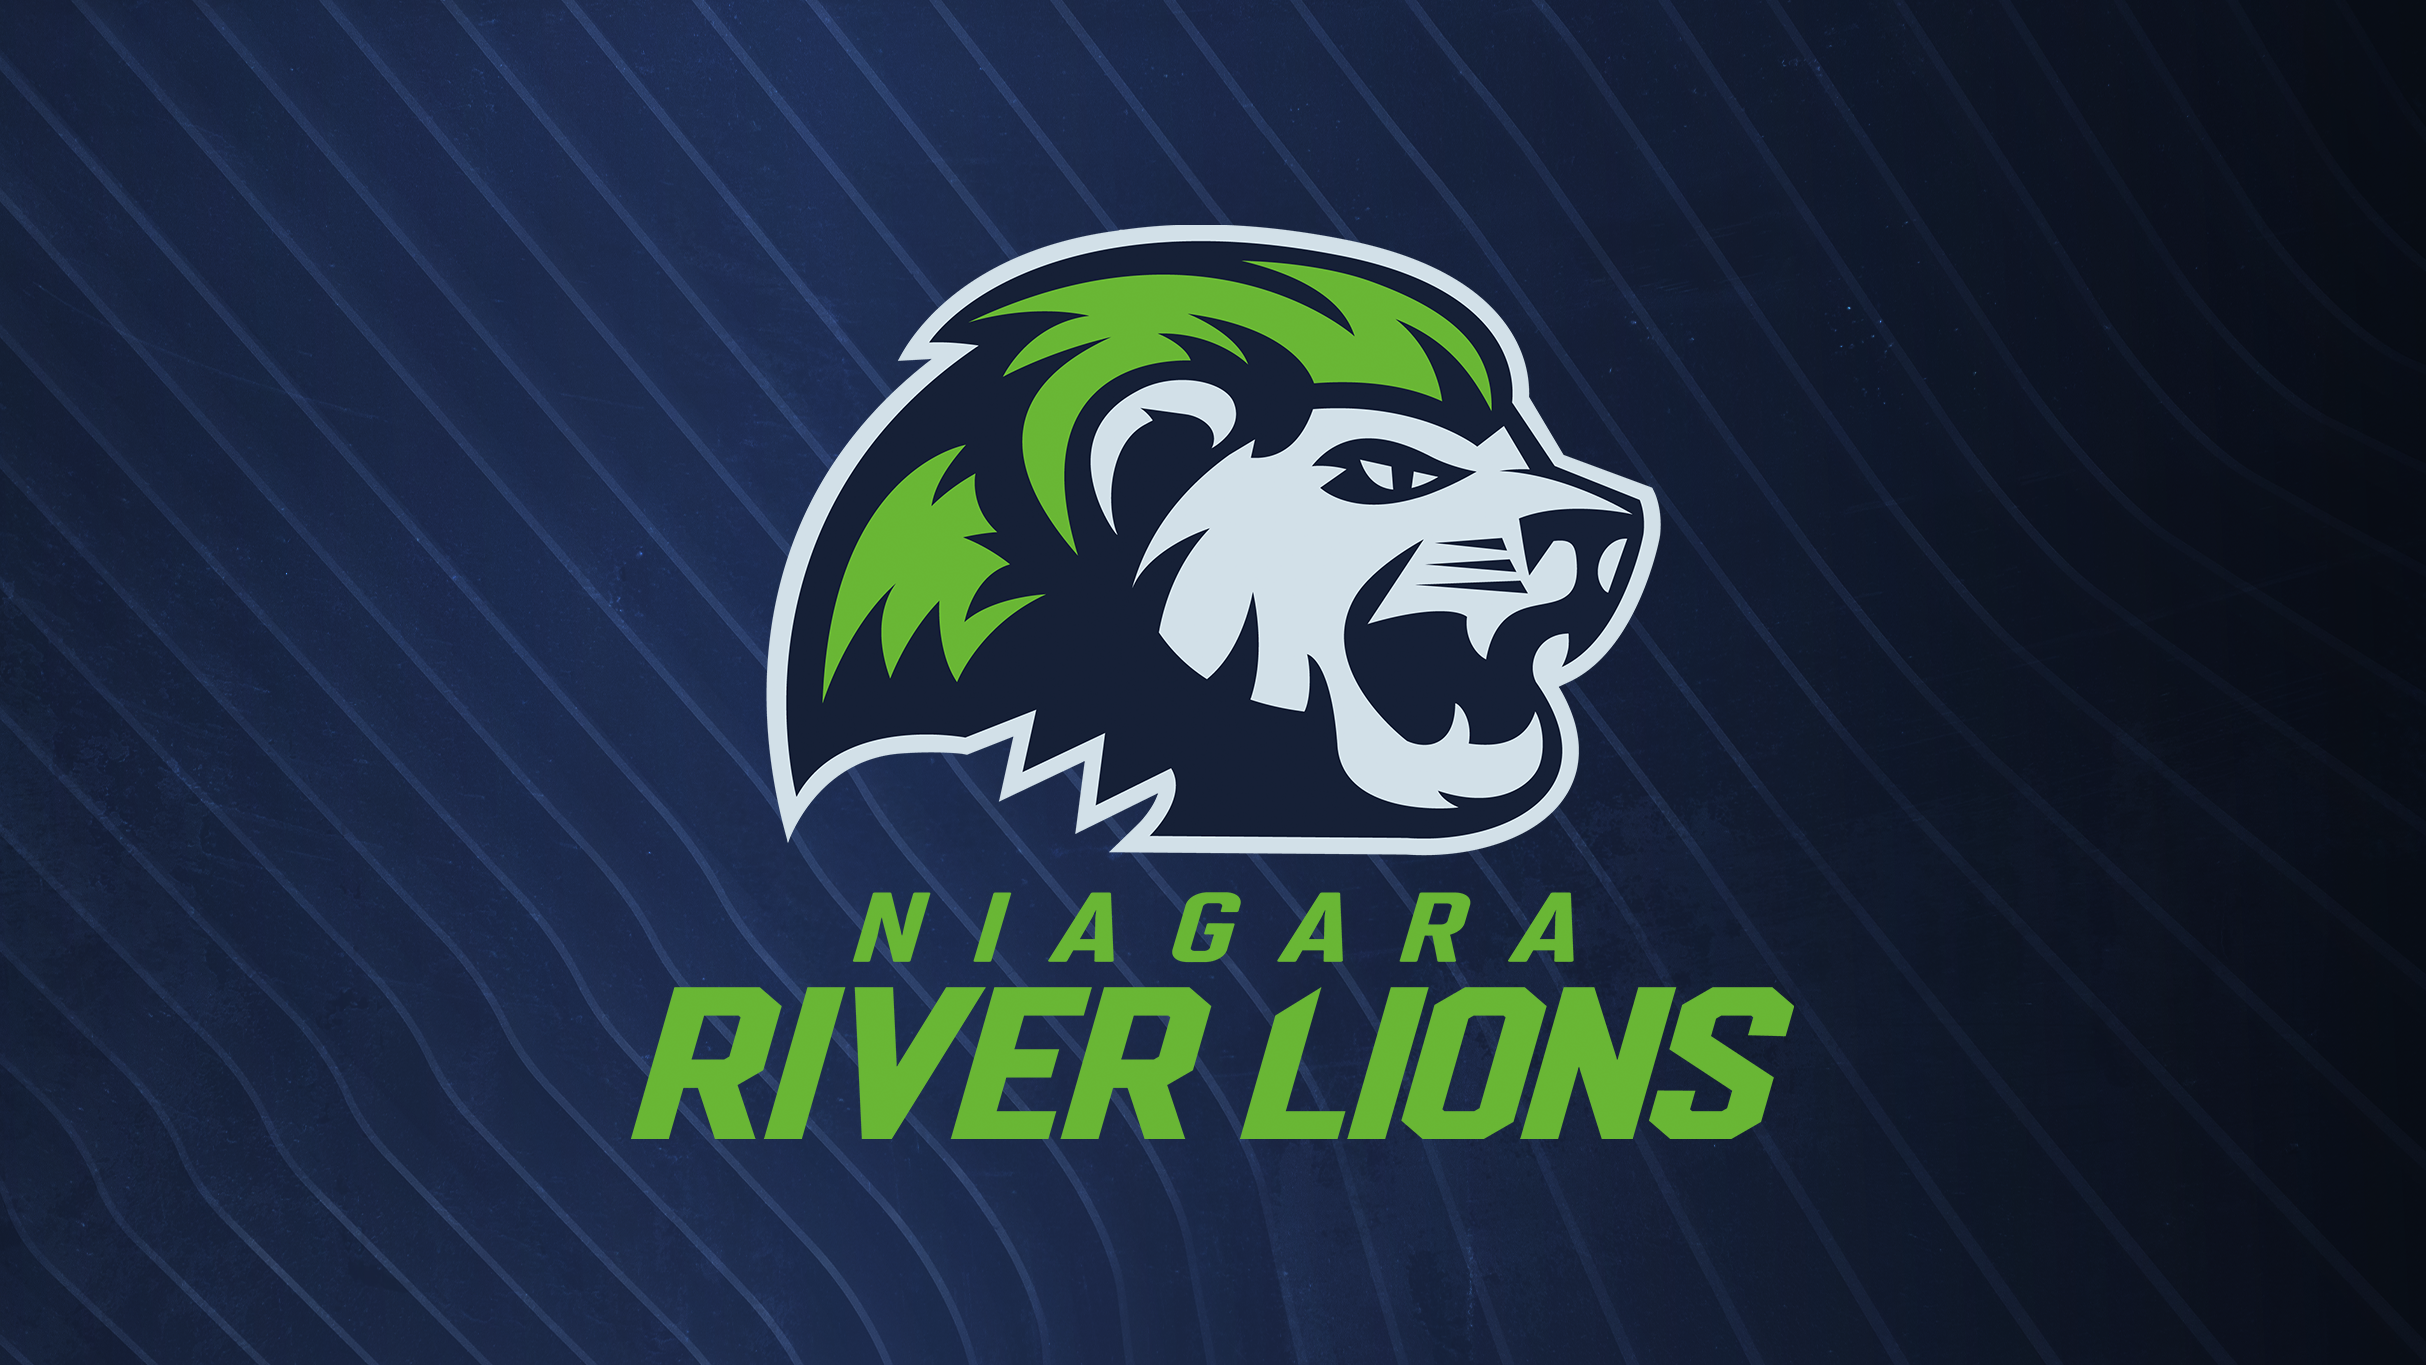 Niagara River Lions vs. Edmonton Stingers presales in St Catharines